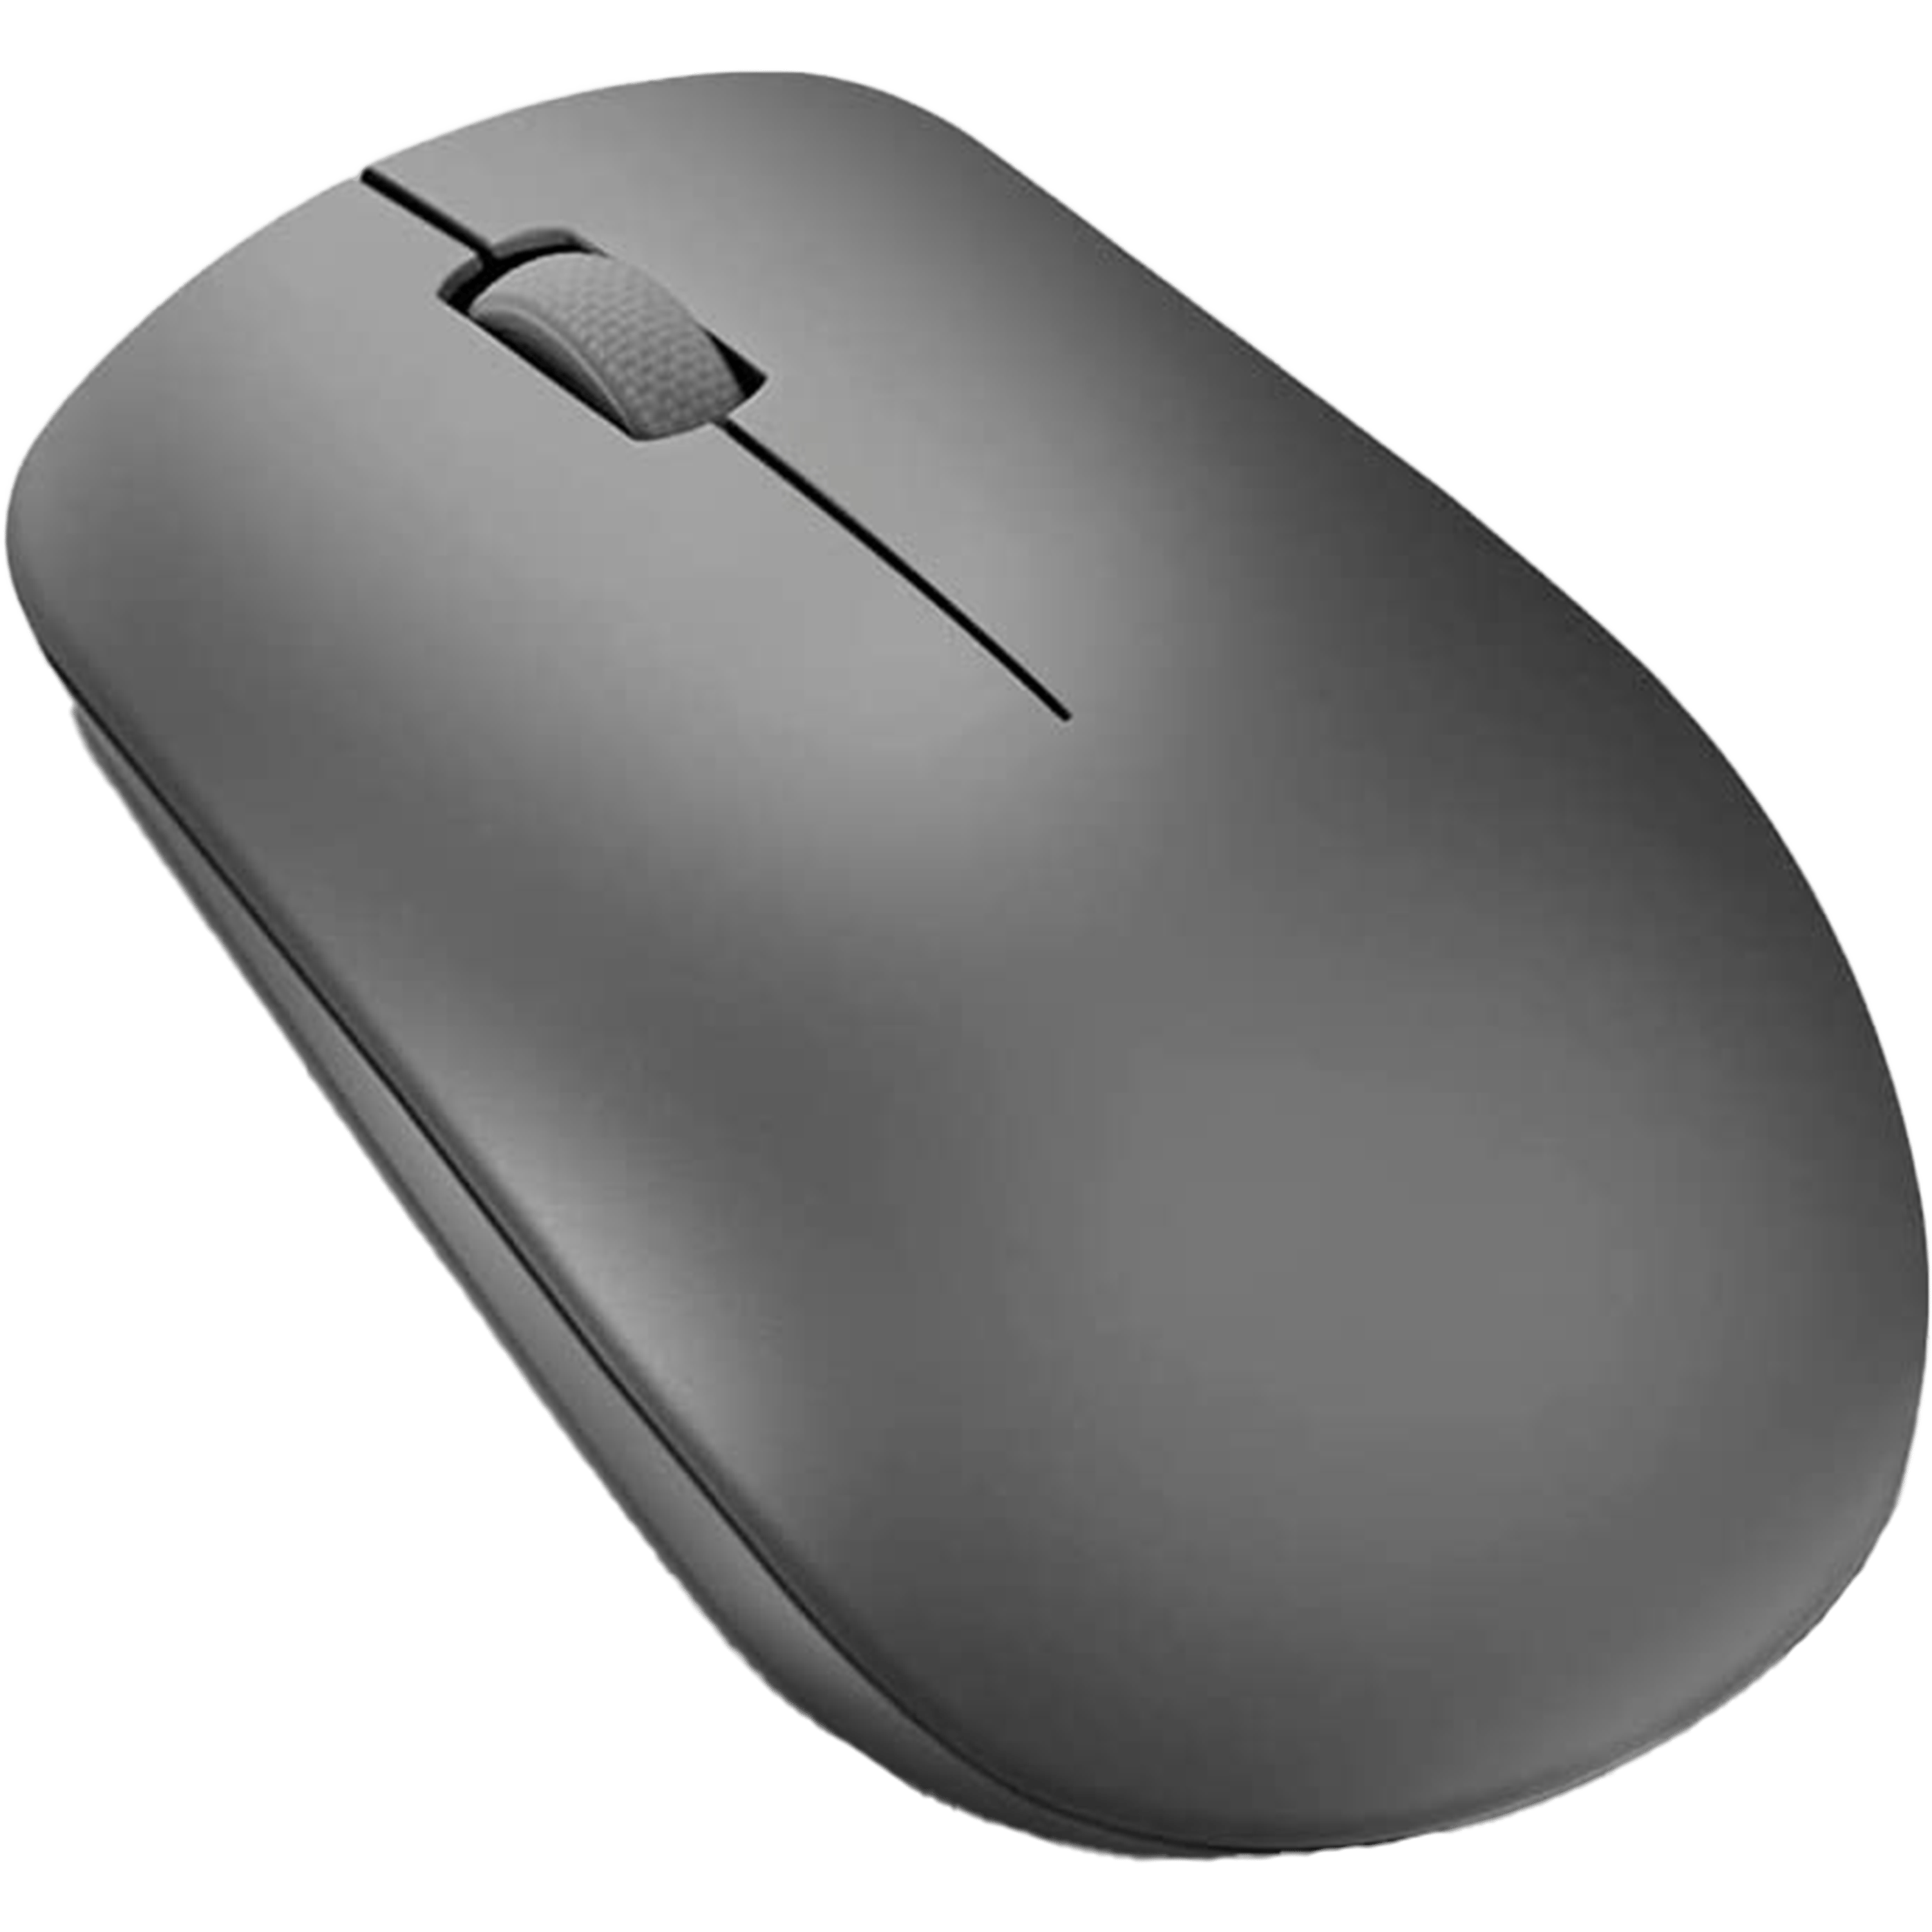 עכבר Lenovo 530 Wireless Mouse (Graphite)